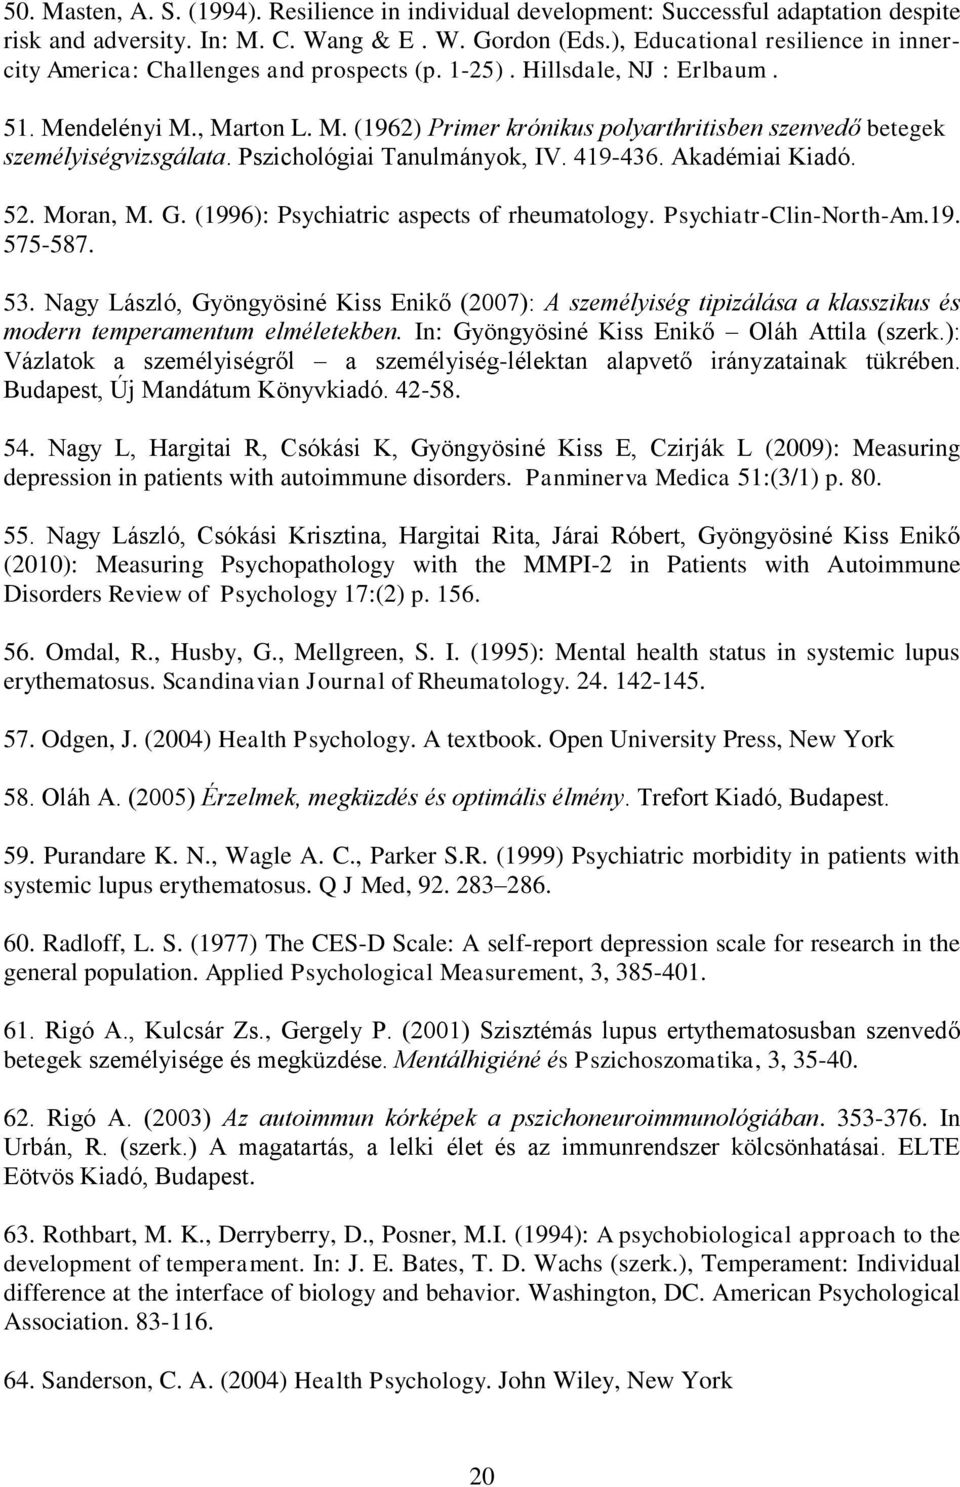 Pszichológiai Tanulmányok, IV. 419-436. Akadémiai Kiadó. 52. Moran, M. G. (1996): Psychiatric aspects of rheumatology. Psychiatr-Clin-North-Am.19. 575-587. 53.